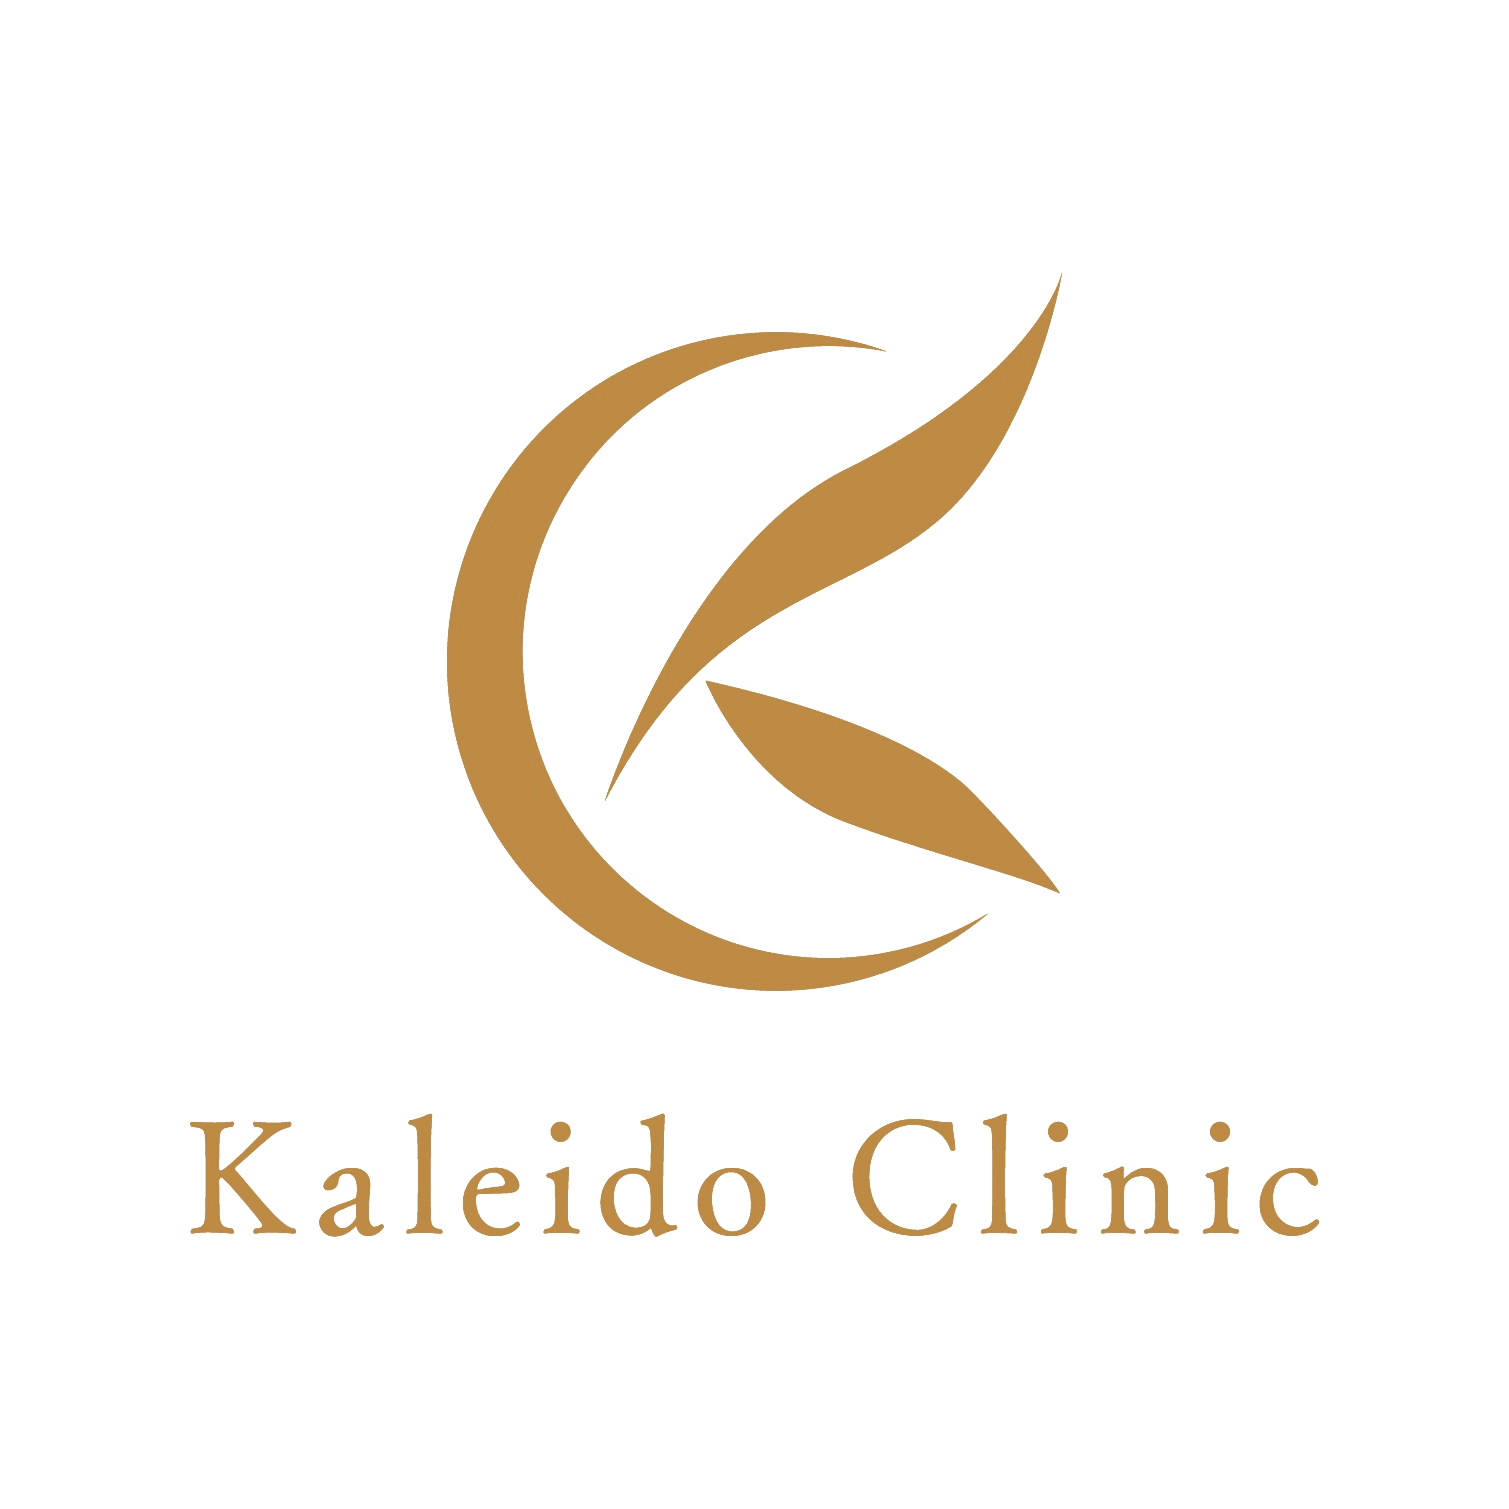 KaleidoClinicのロゴ画像